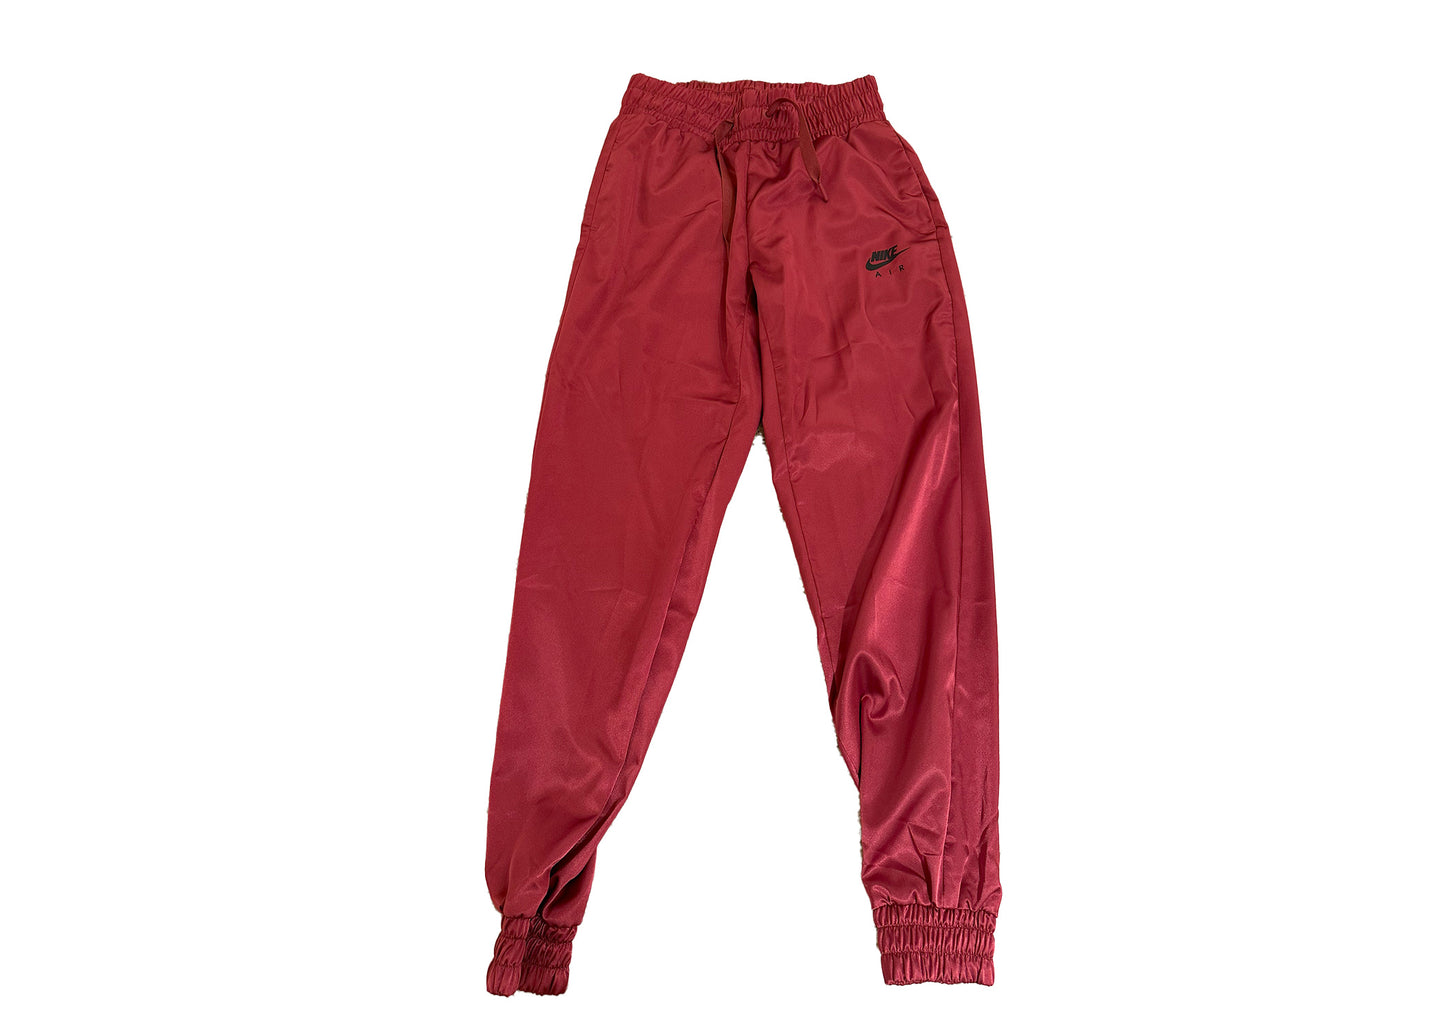 AIR NIKE Rubies Color Jacket and Pants Set